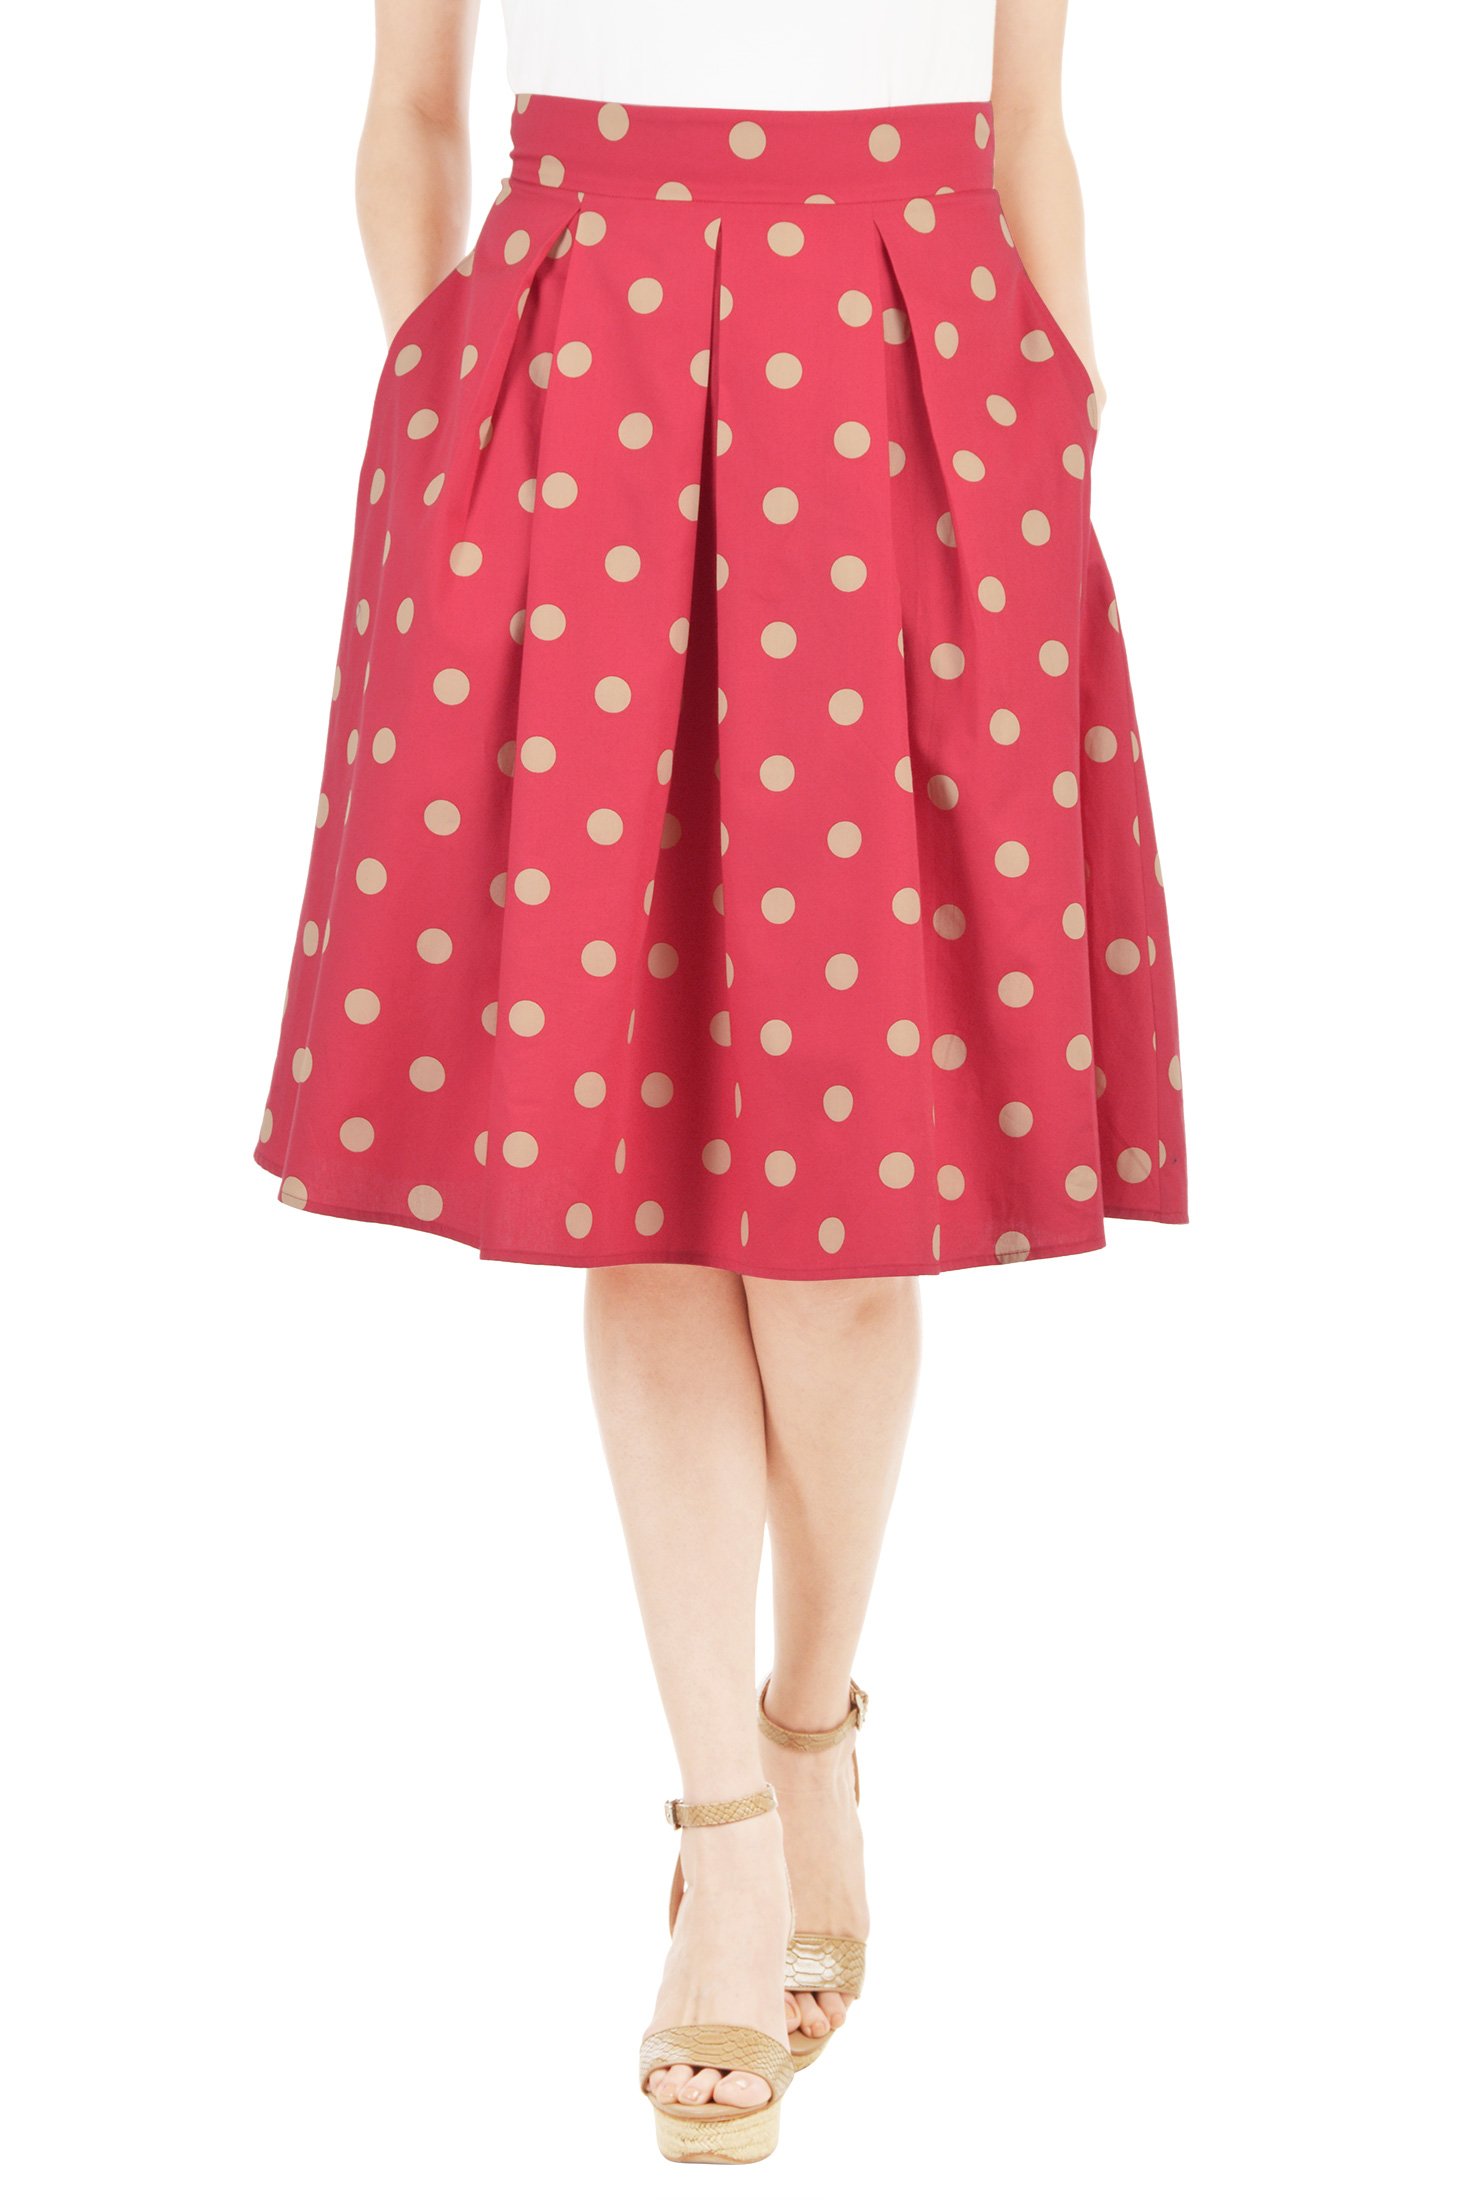 Shop Polka dot cotton poplin skirt | eShakti